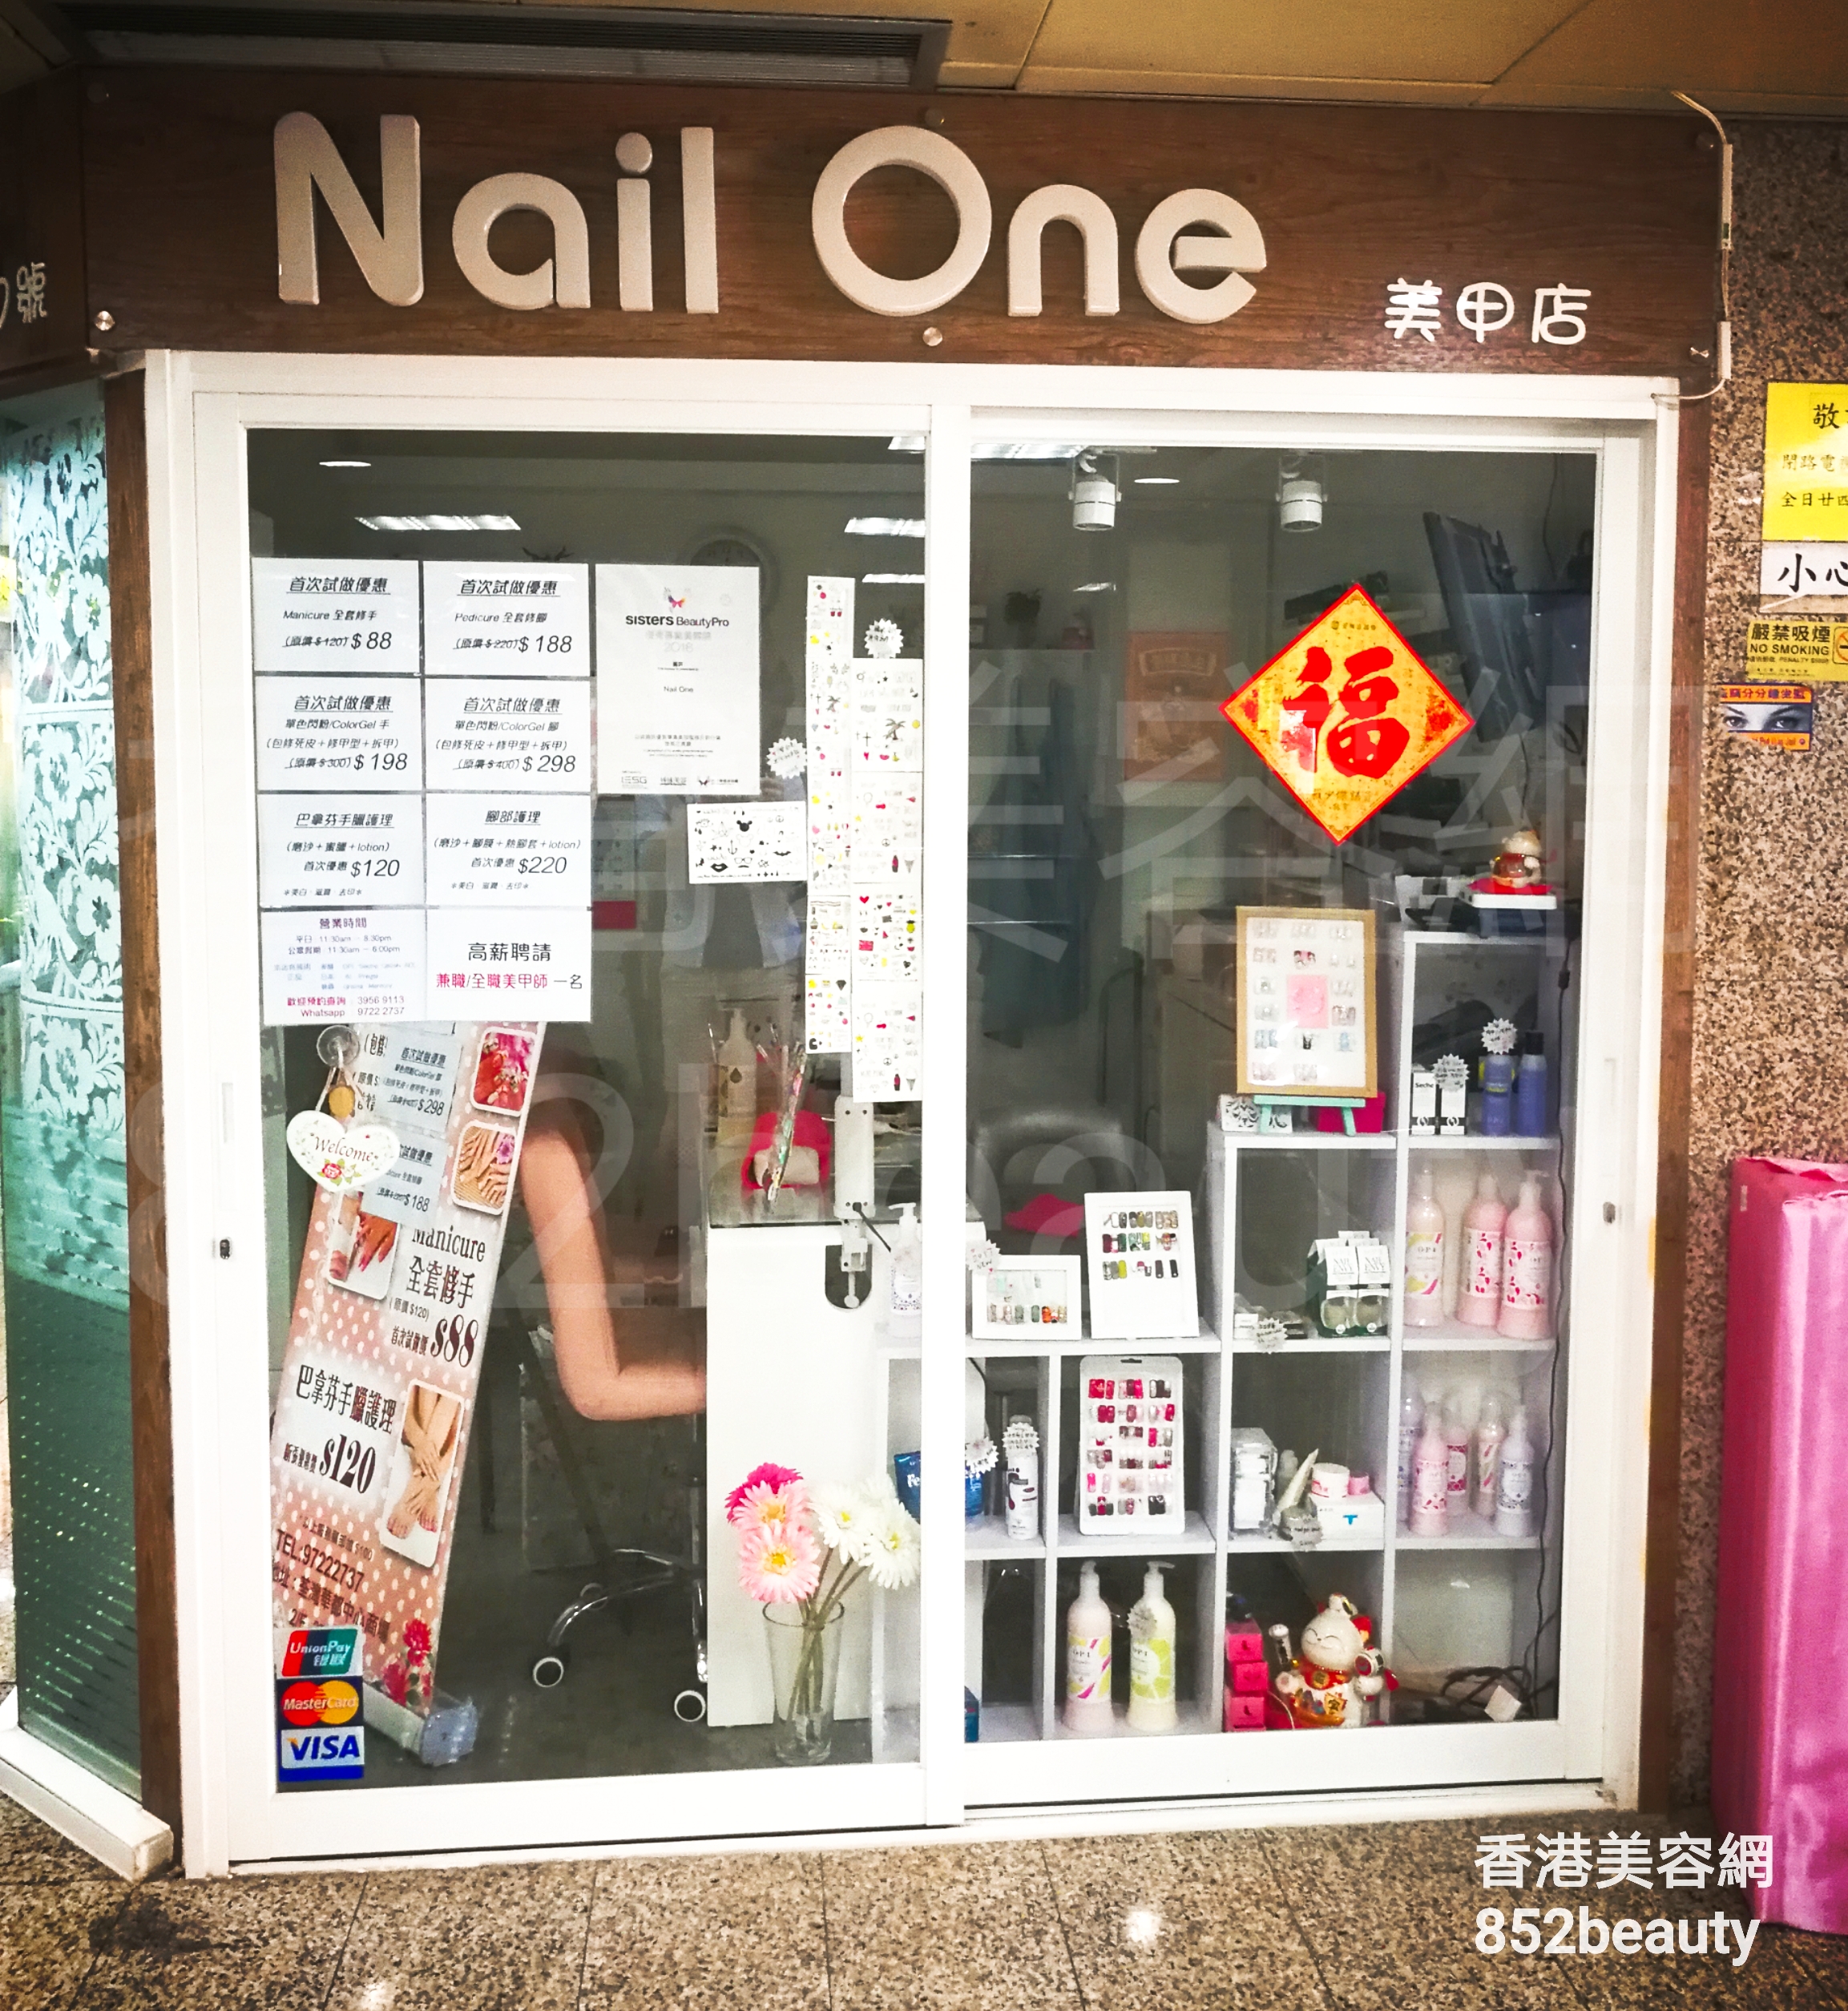 美容院: Nail One 美甲店